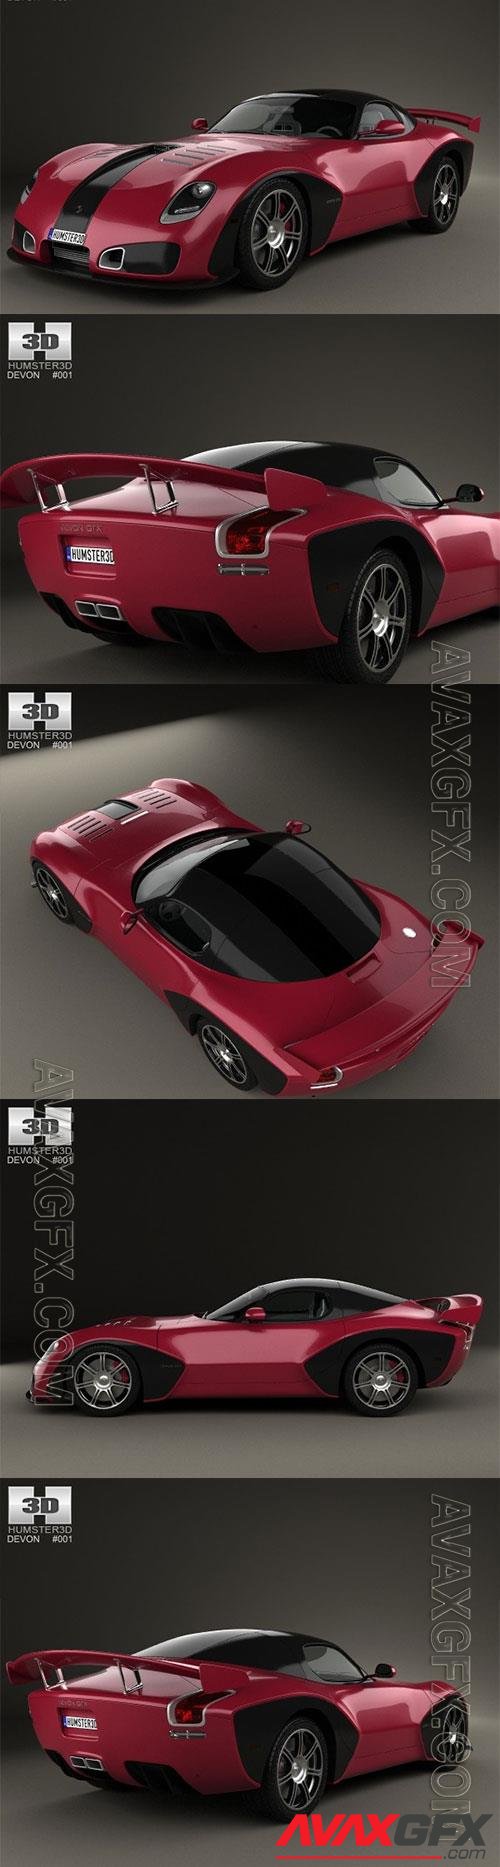 Devon GTX 2010 3D Model